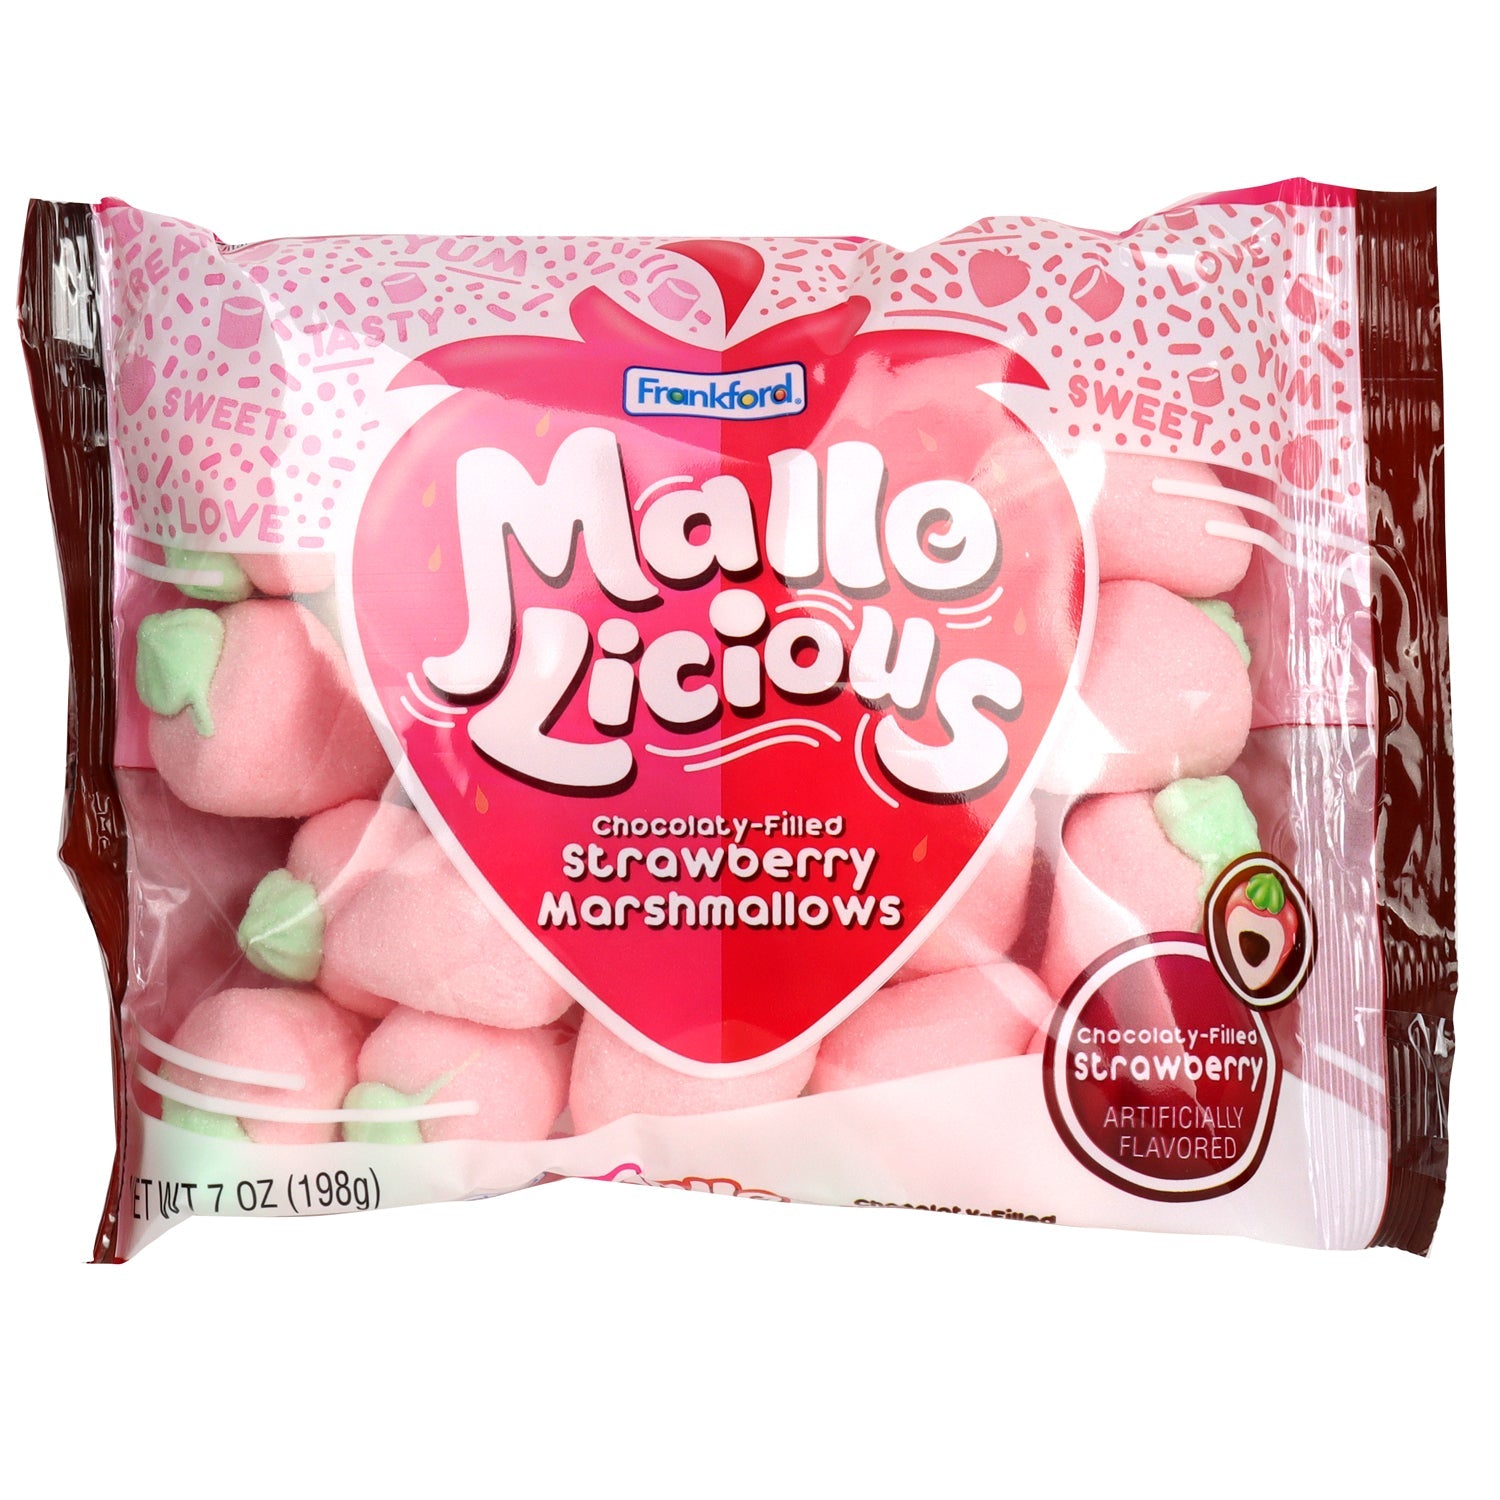 Mallolicious Chocolaty-Filled Strawberry Marshmallows